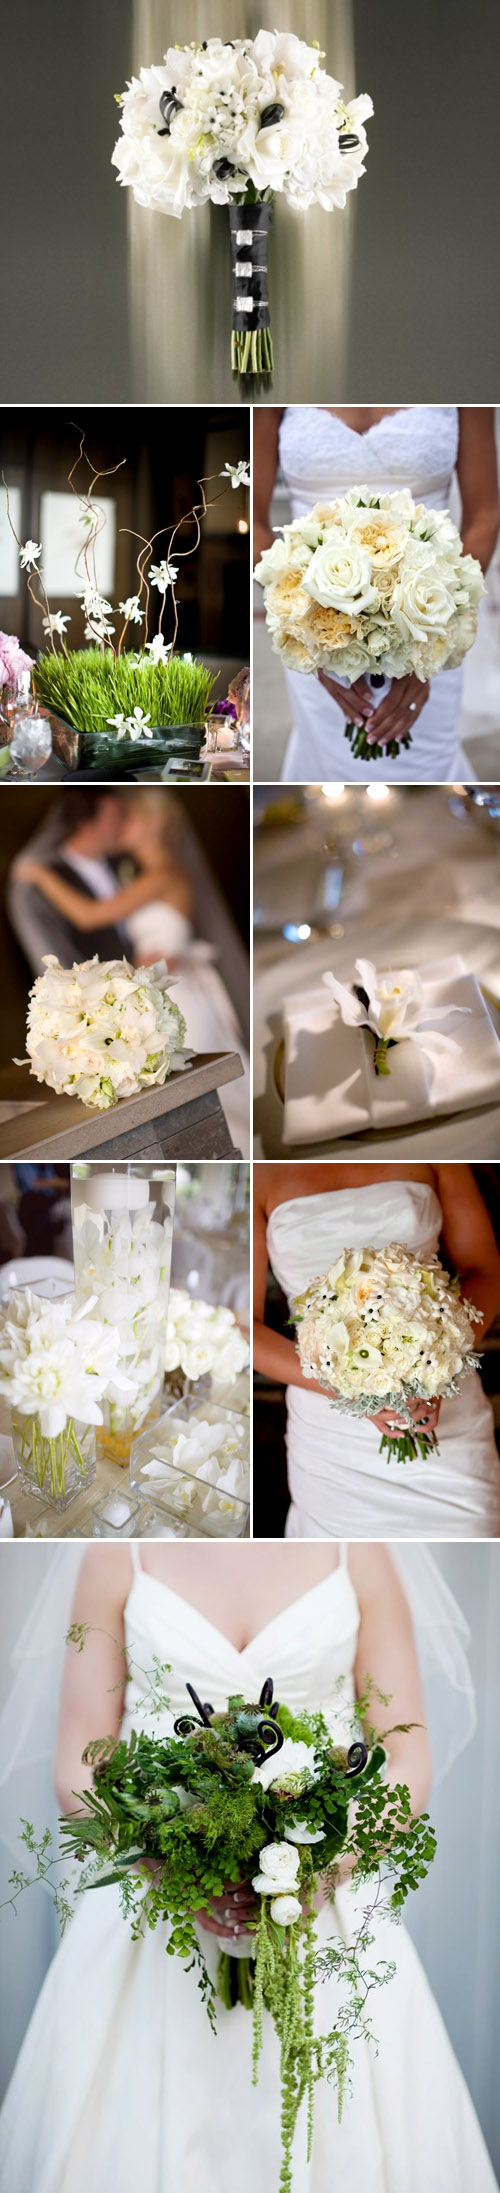 white wedding floral bouquets, centerpieces and decor by Flora Nova Floral and Event Design, images via the Flora Nova website and blog